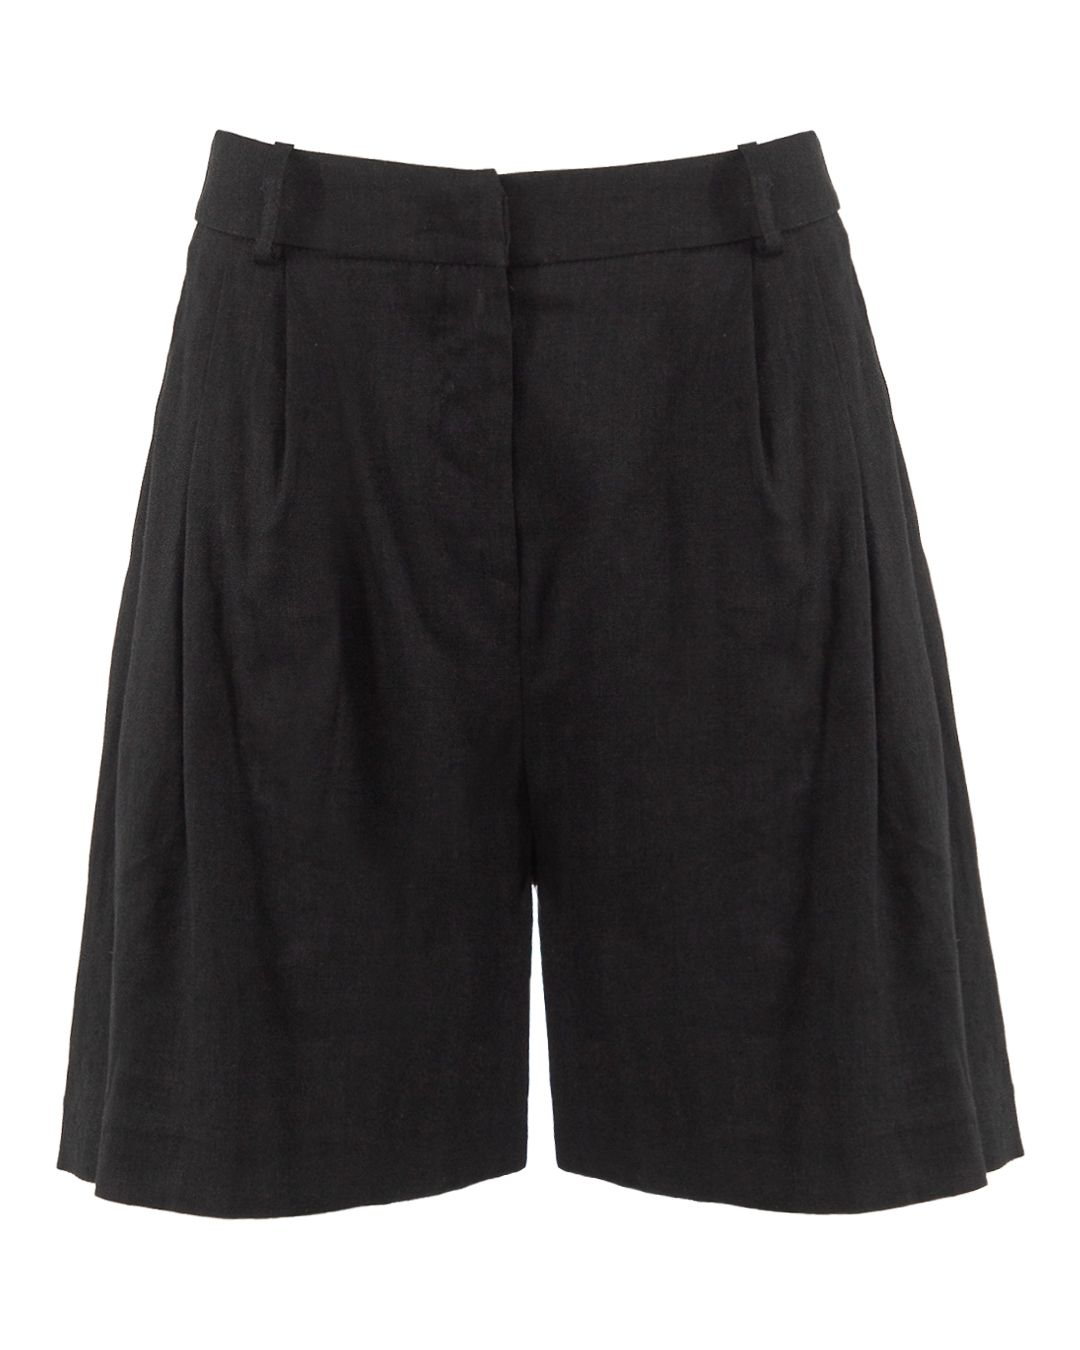 шорты ICONA BY KAOS PP5CO022 черный 42, размер 42